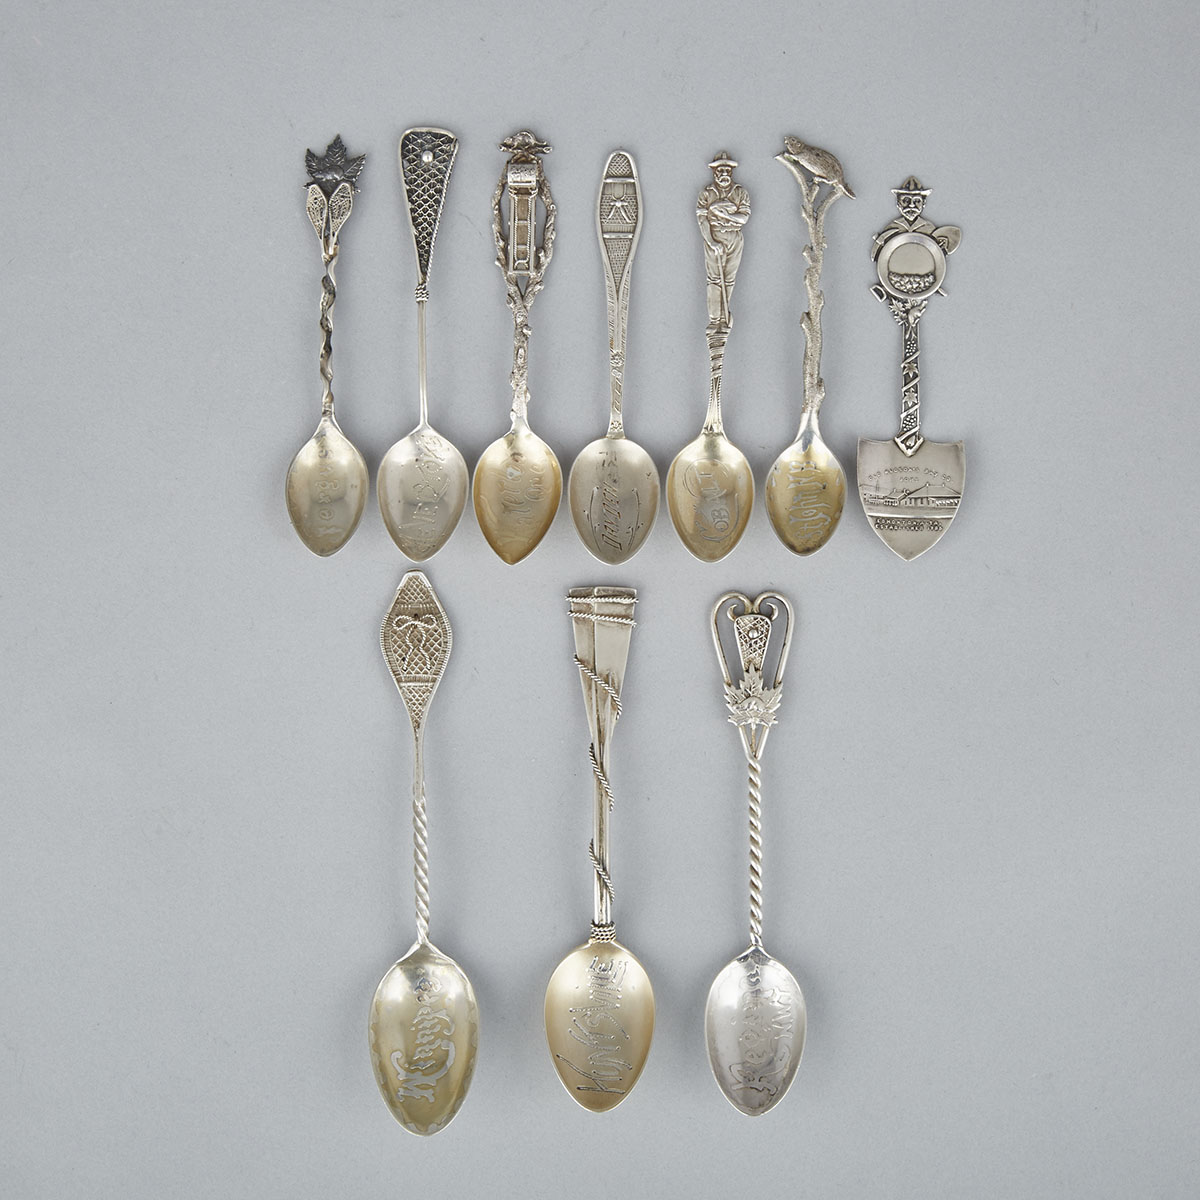 Ten Canadian Silver Novelty Souvenir Spoons, early 20th century